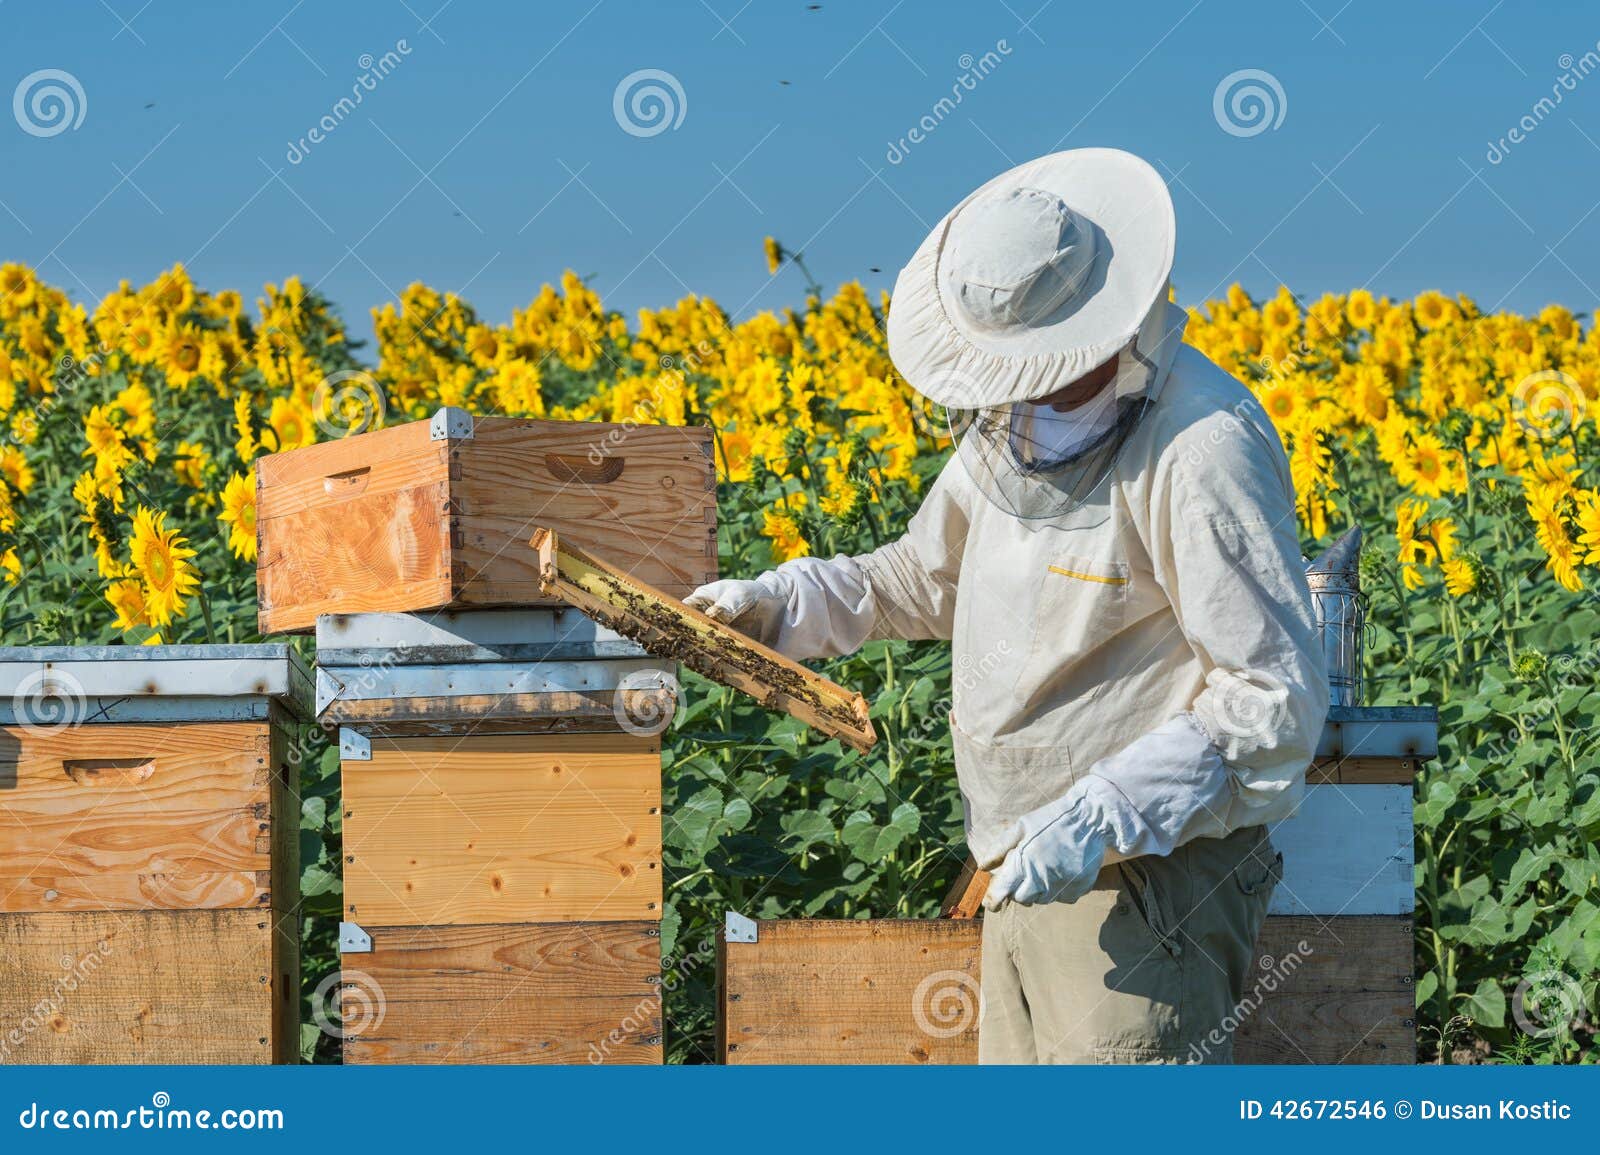 beekeeper working